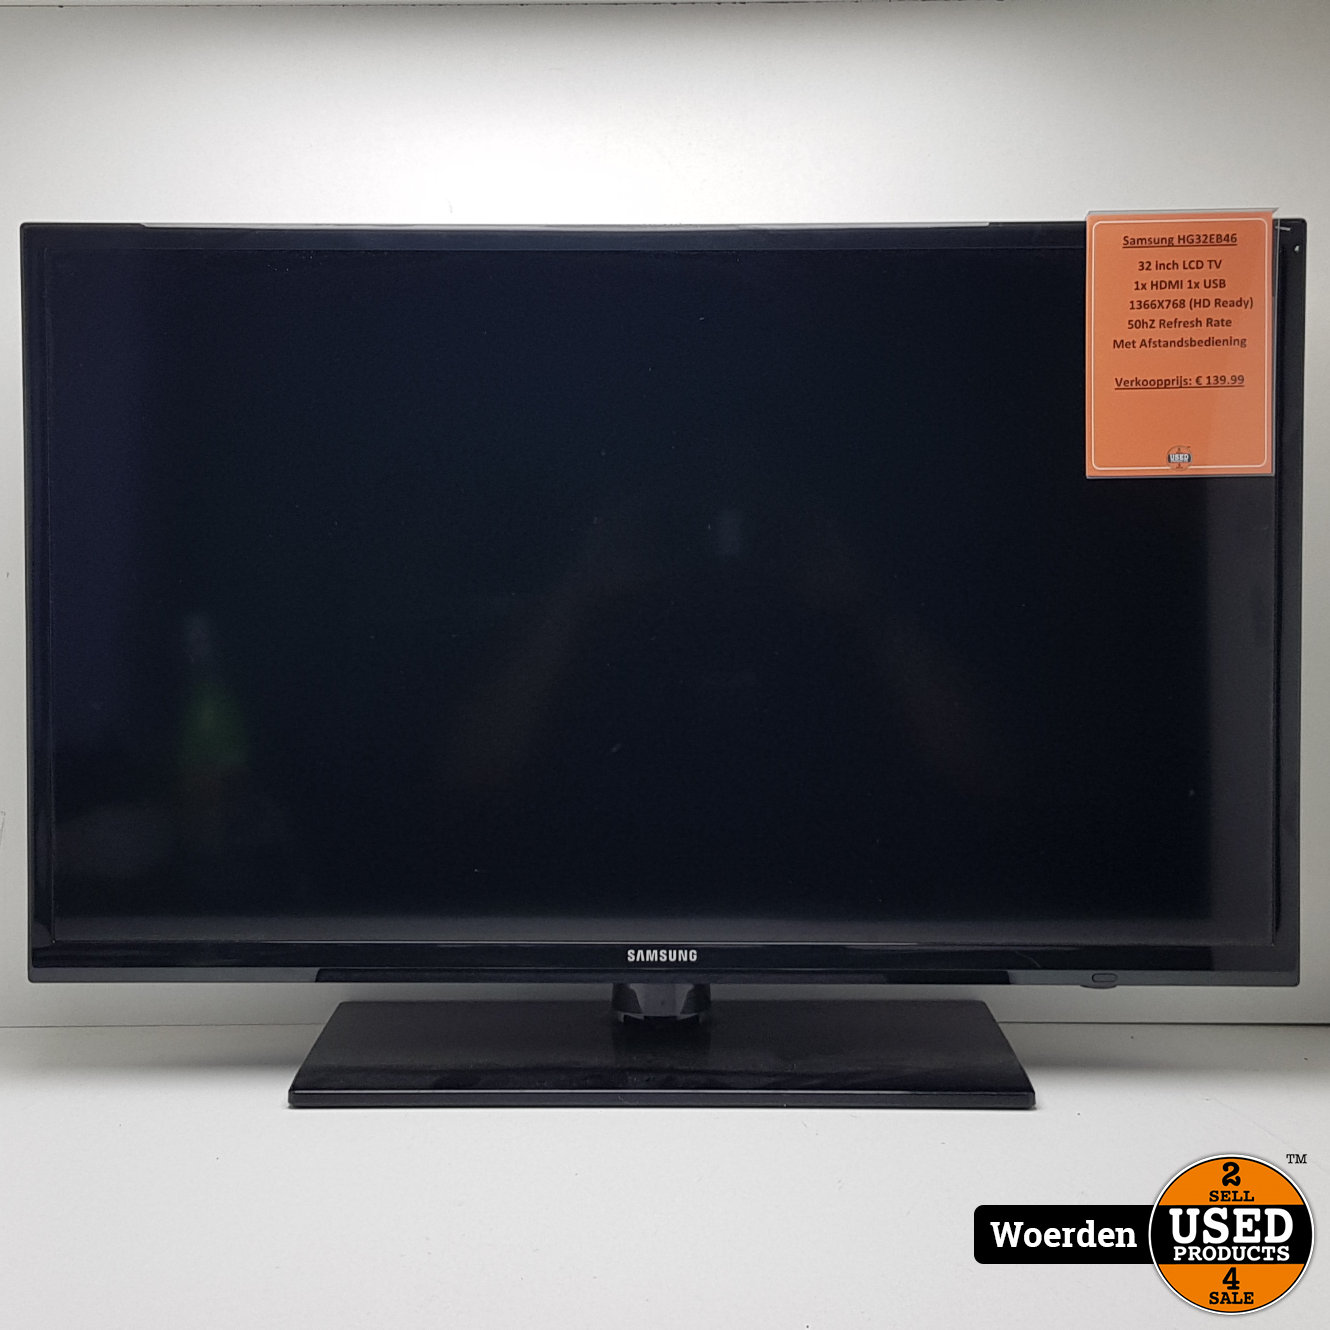 van tempo kosten Samsung HG32EB460 LCD TV || Incl AB met Garantie - Used Products Woerden